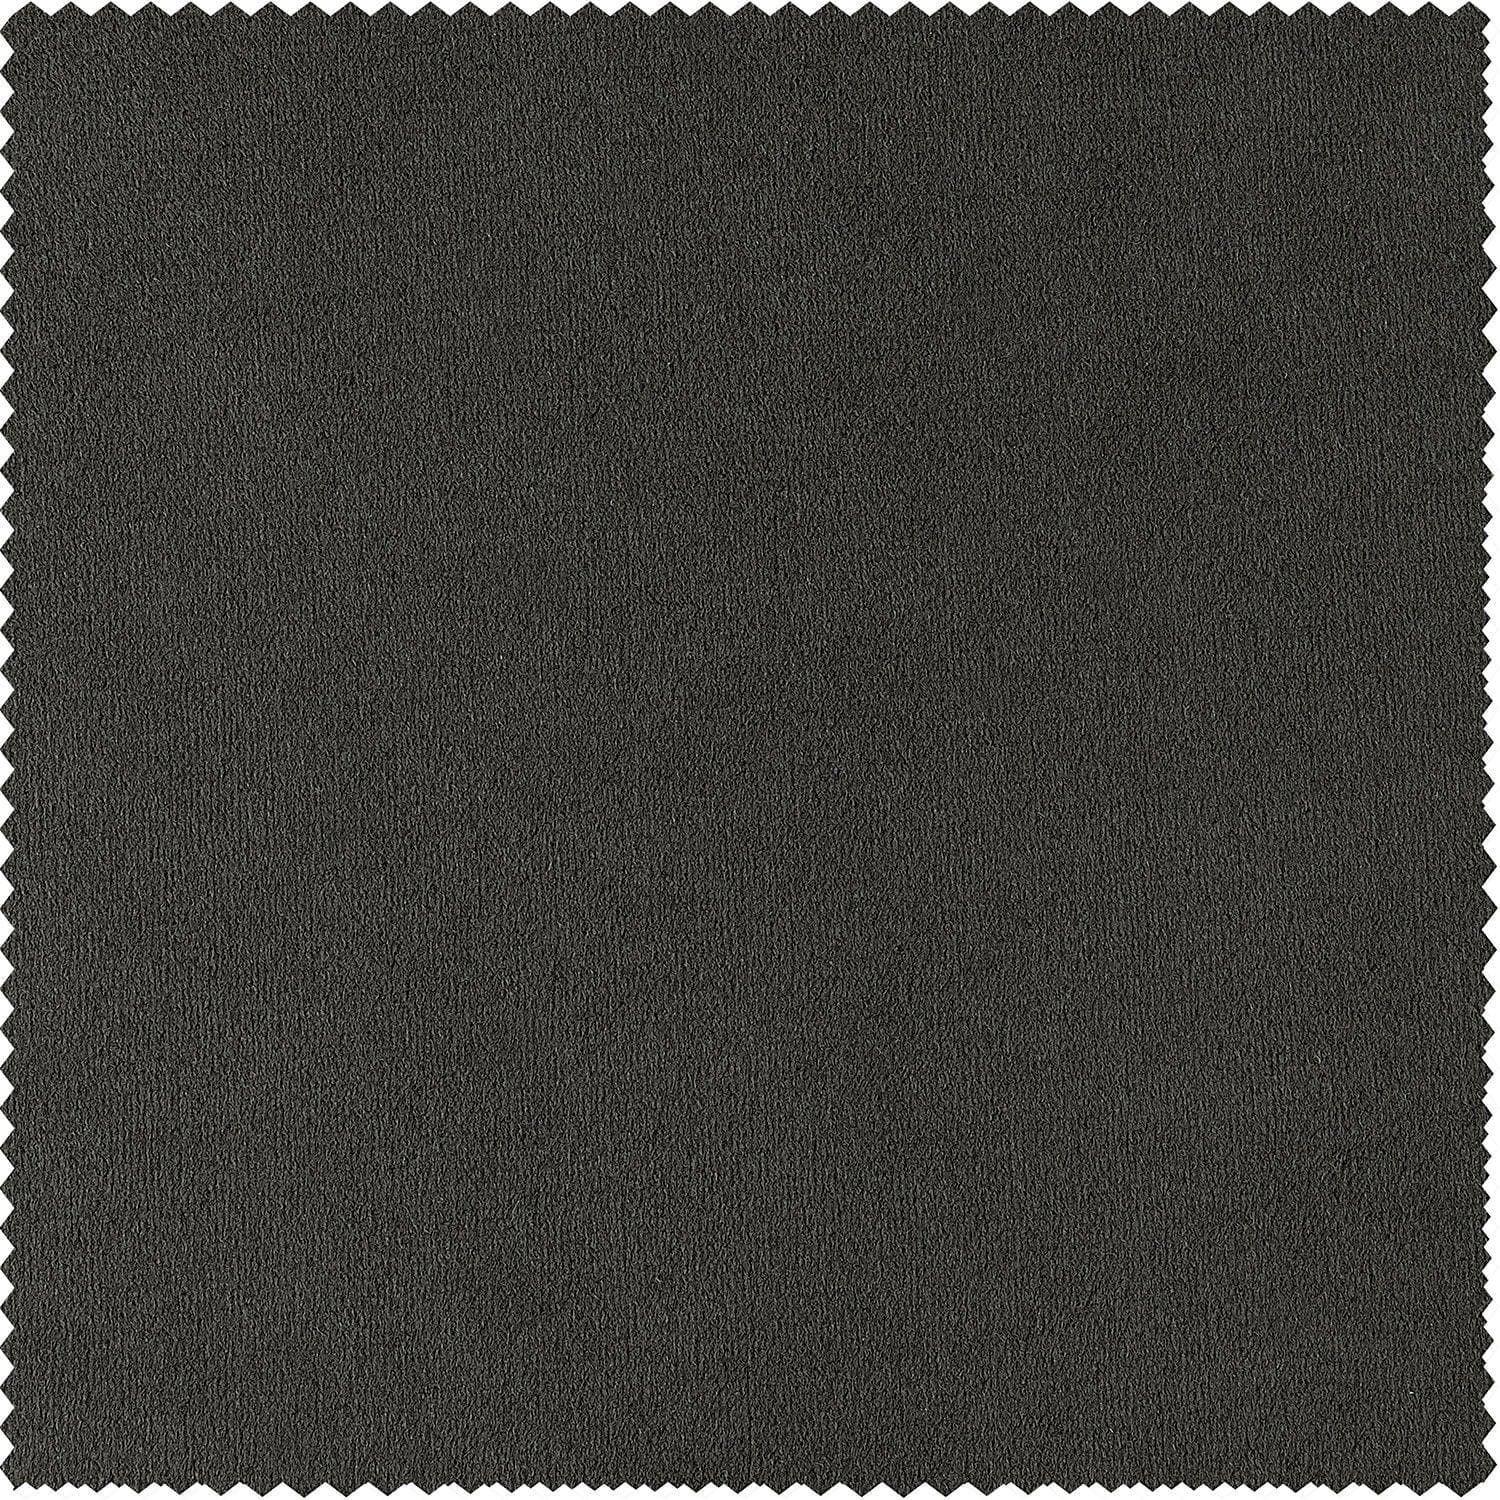 Gunmetal Grey Signature Velvet Cushion Covers - Pair